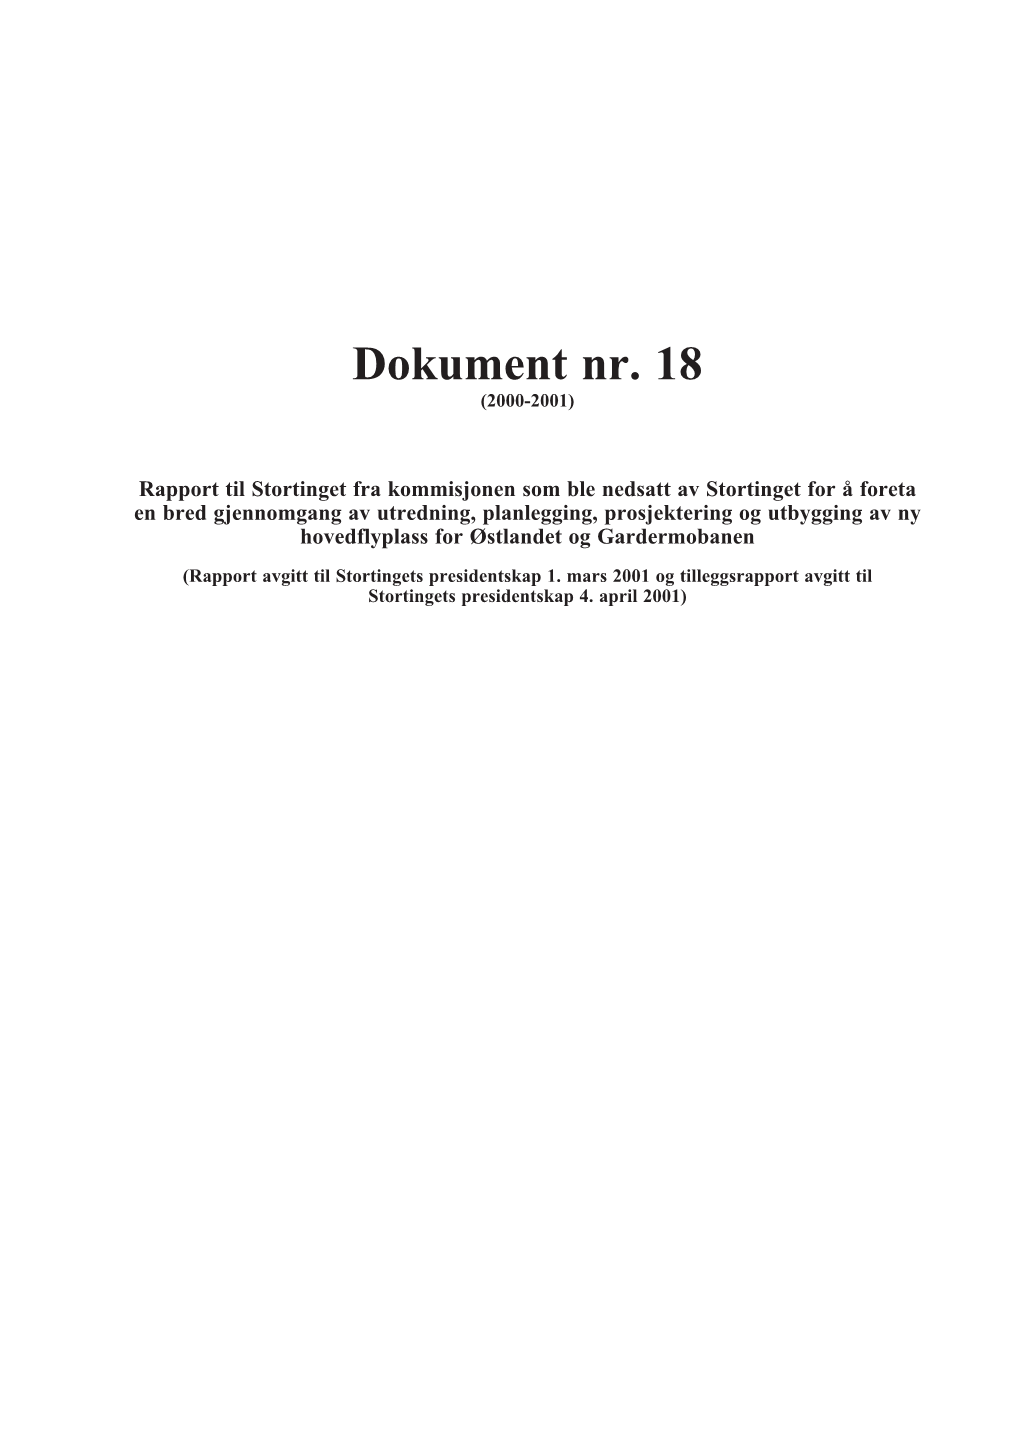 Dokument Nr. 18 (2000-2001)